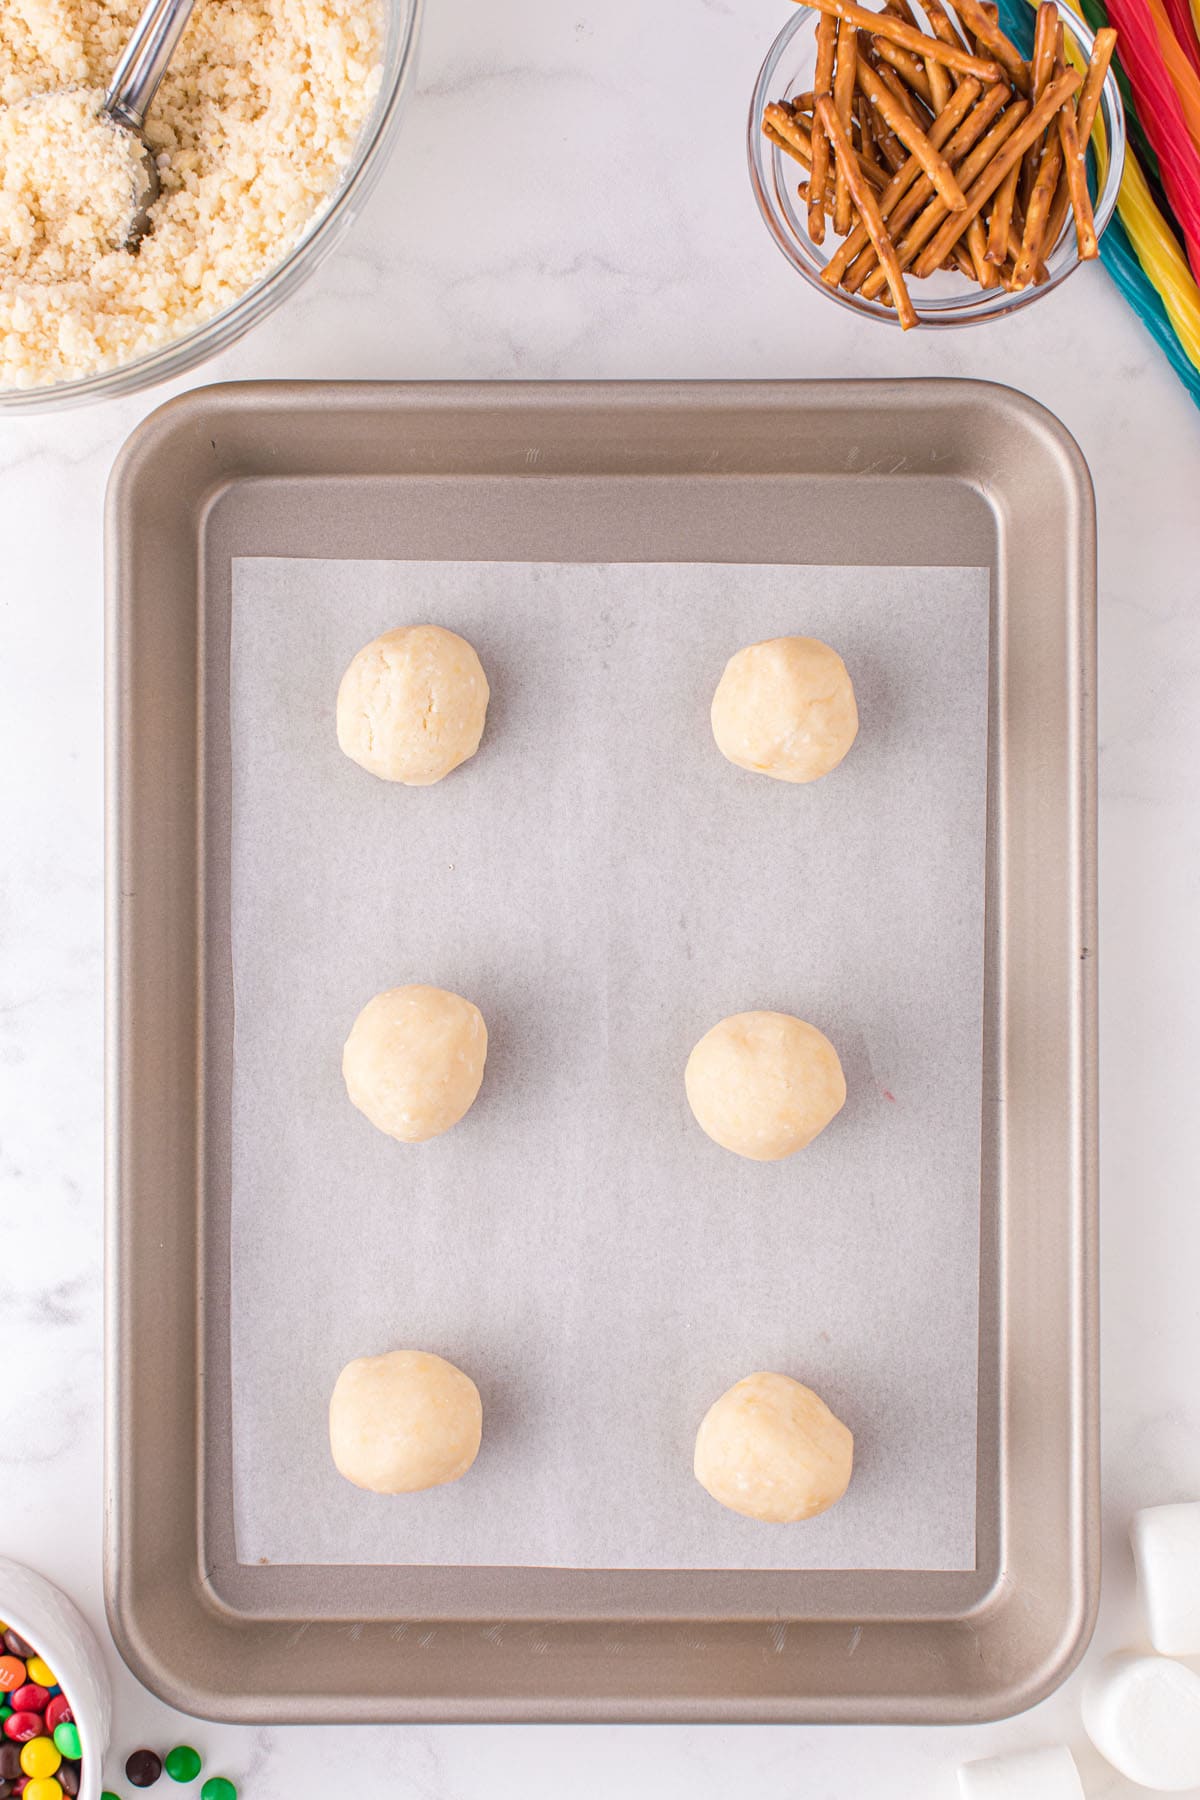 Form dough into balls